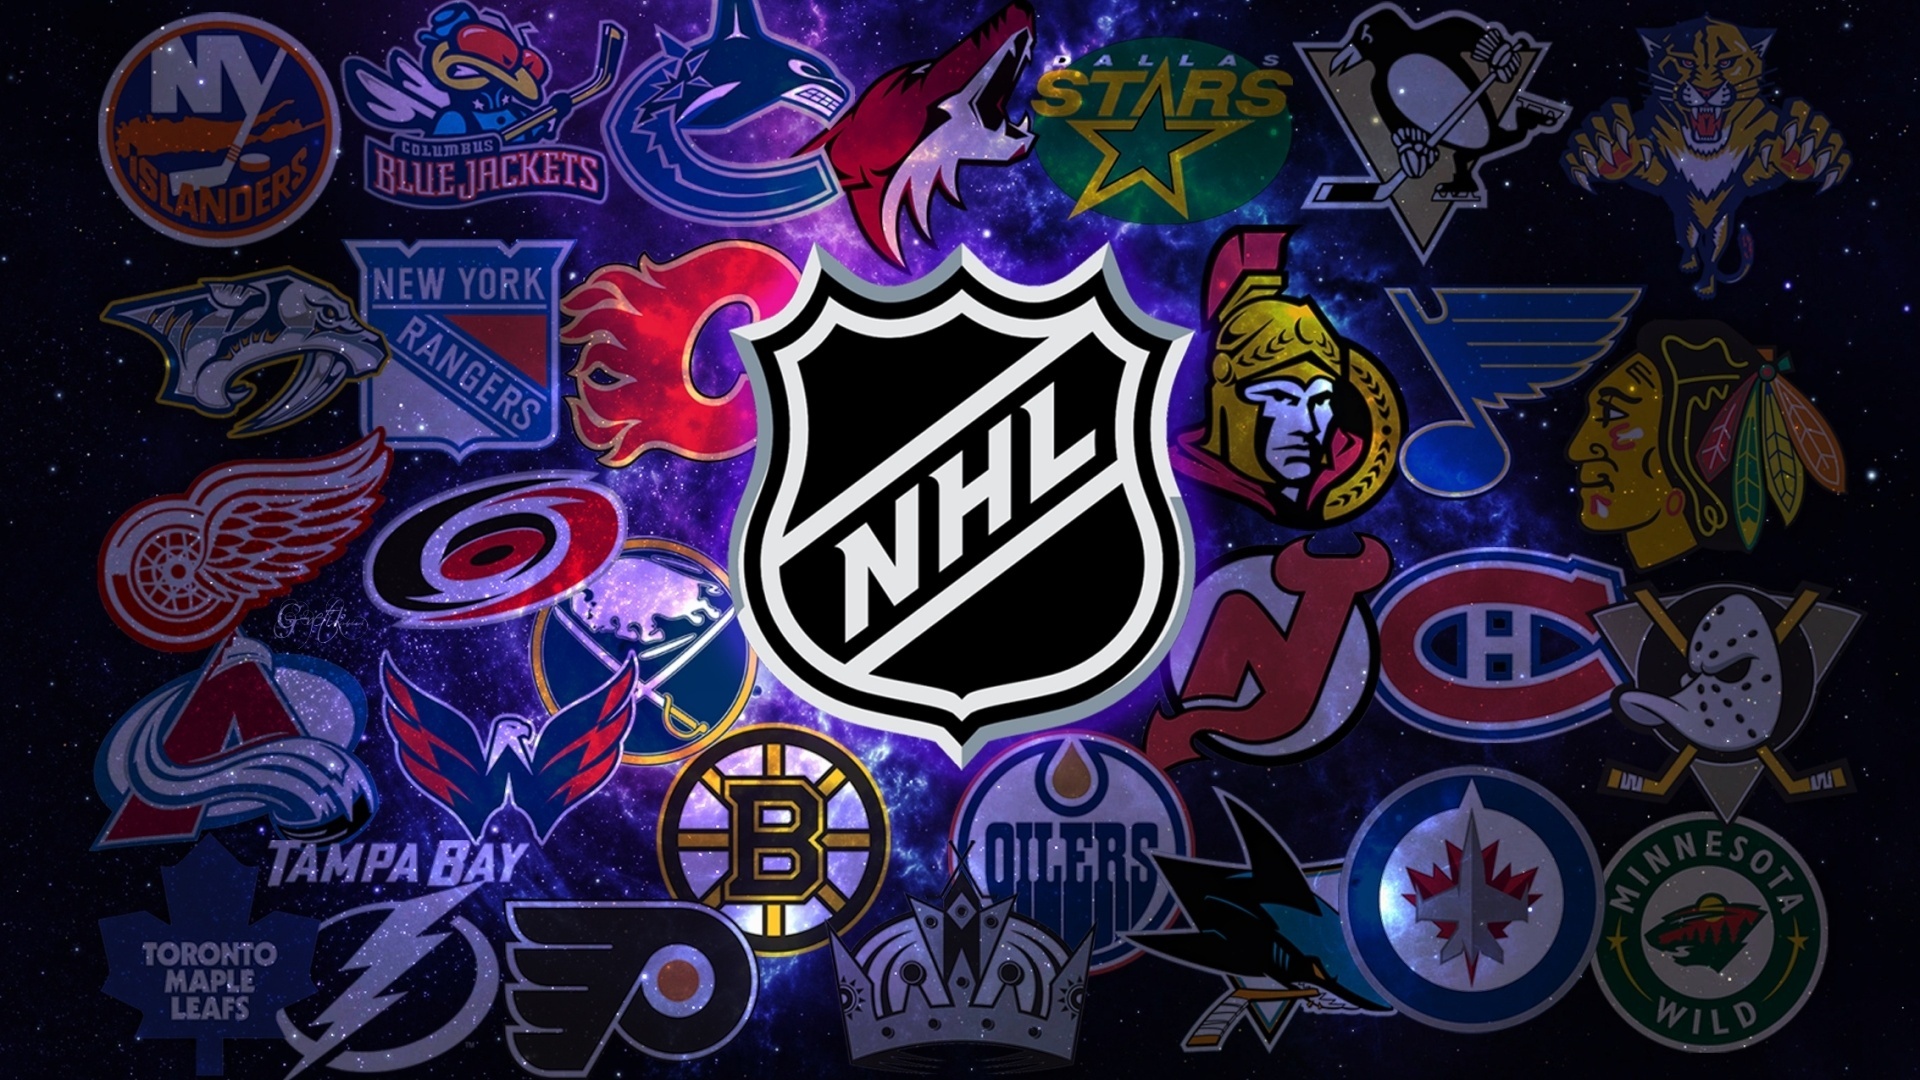 Hockey nhl logo wallpaper 1920x1080 85896 WallpaperUP